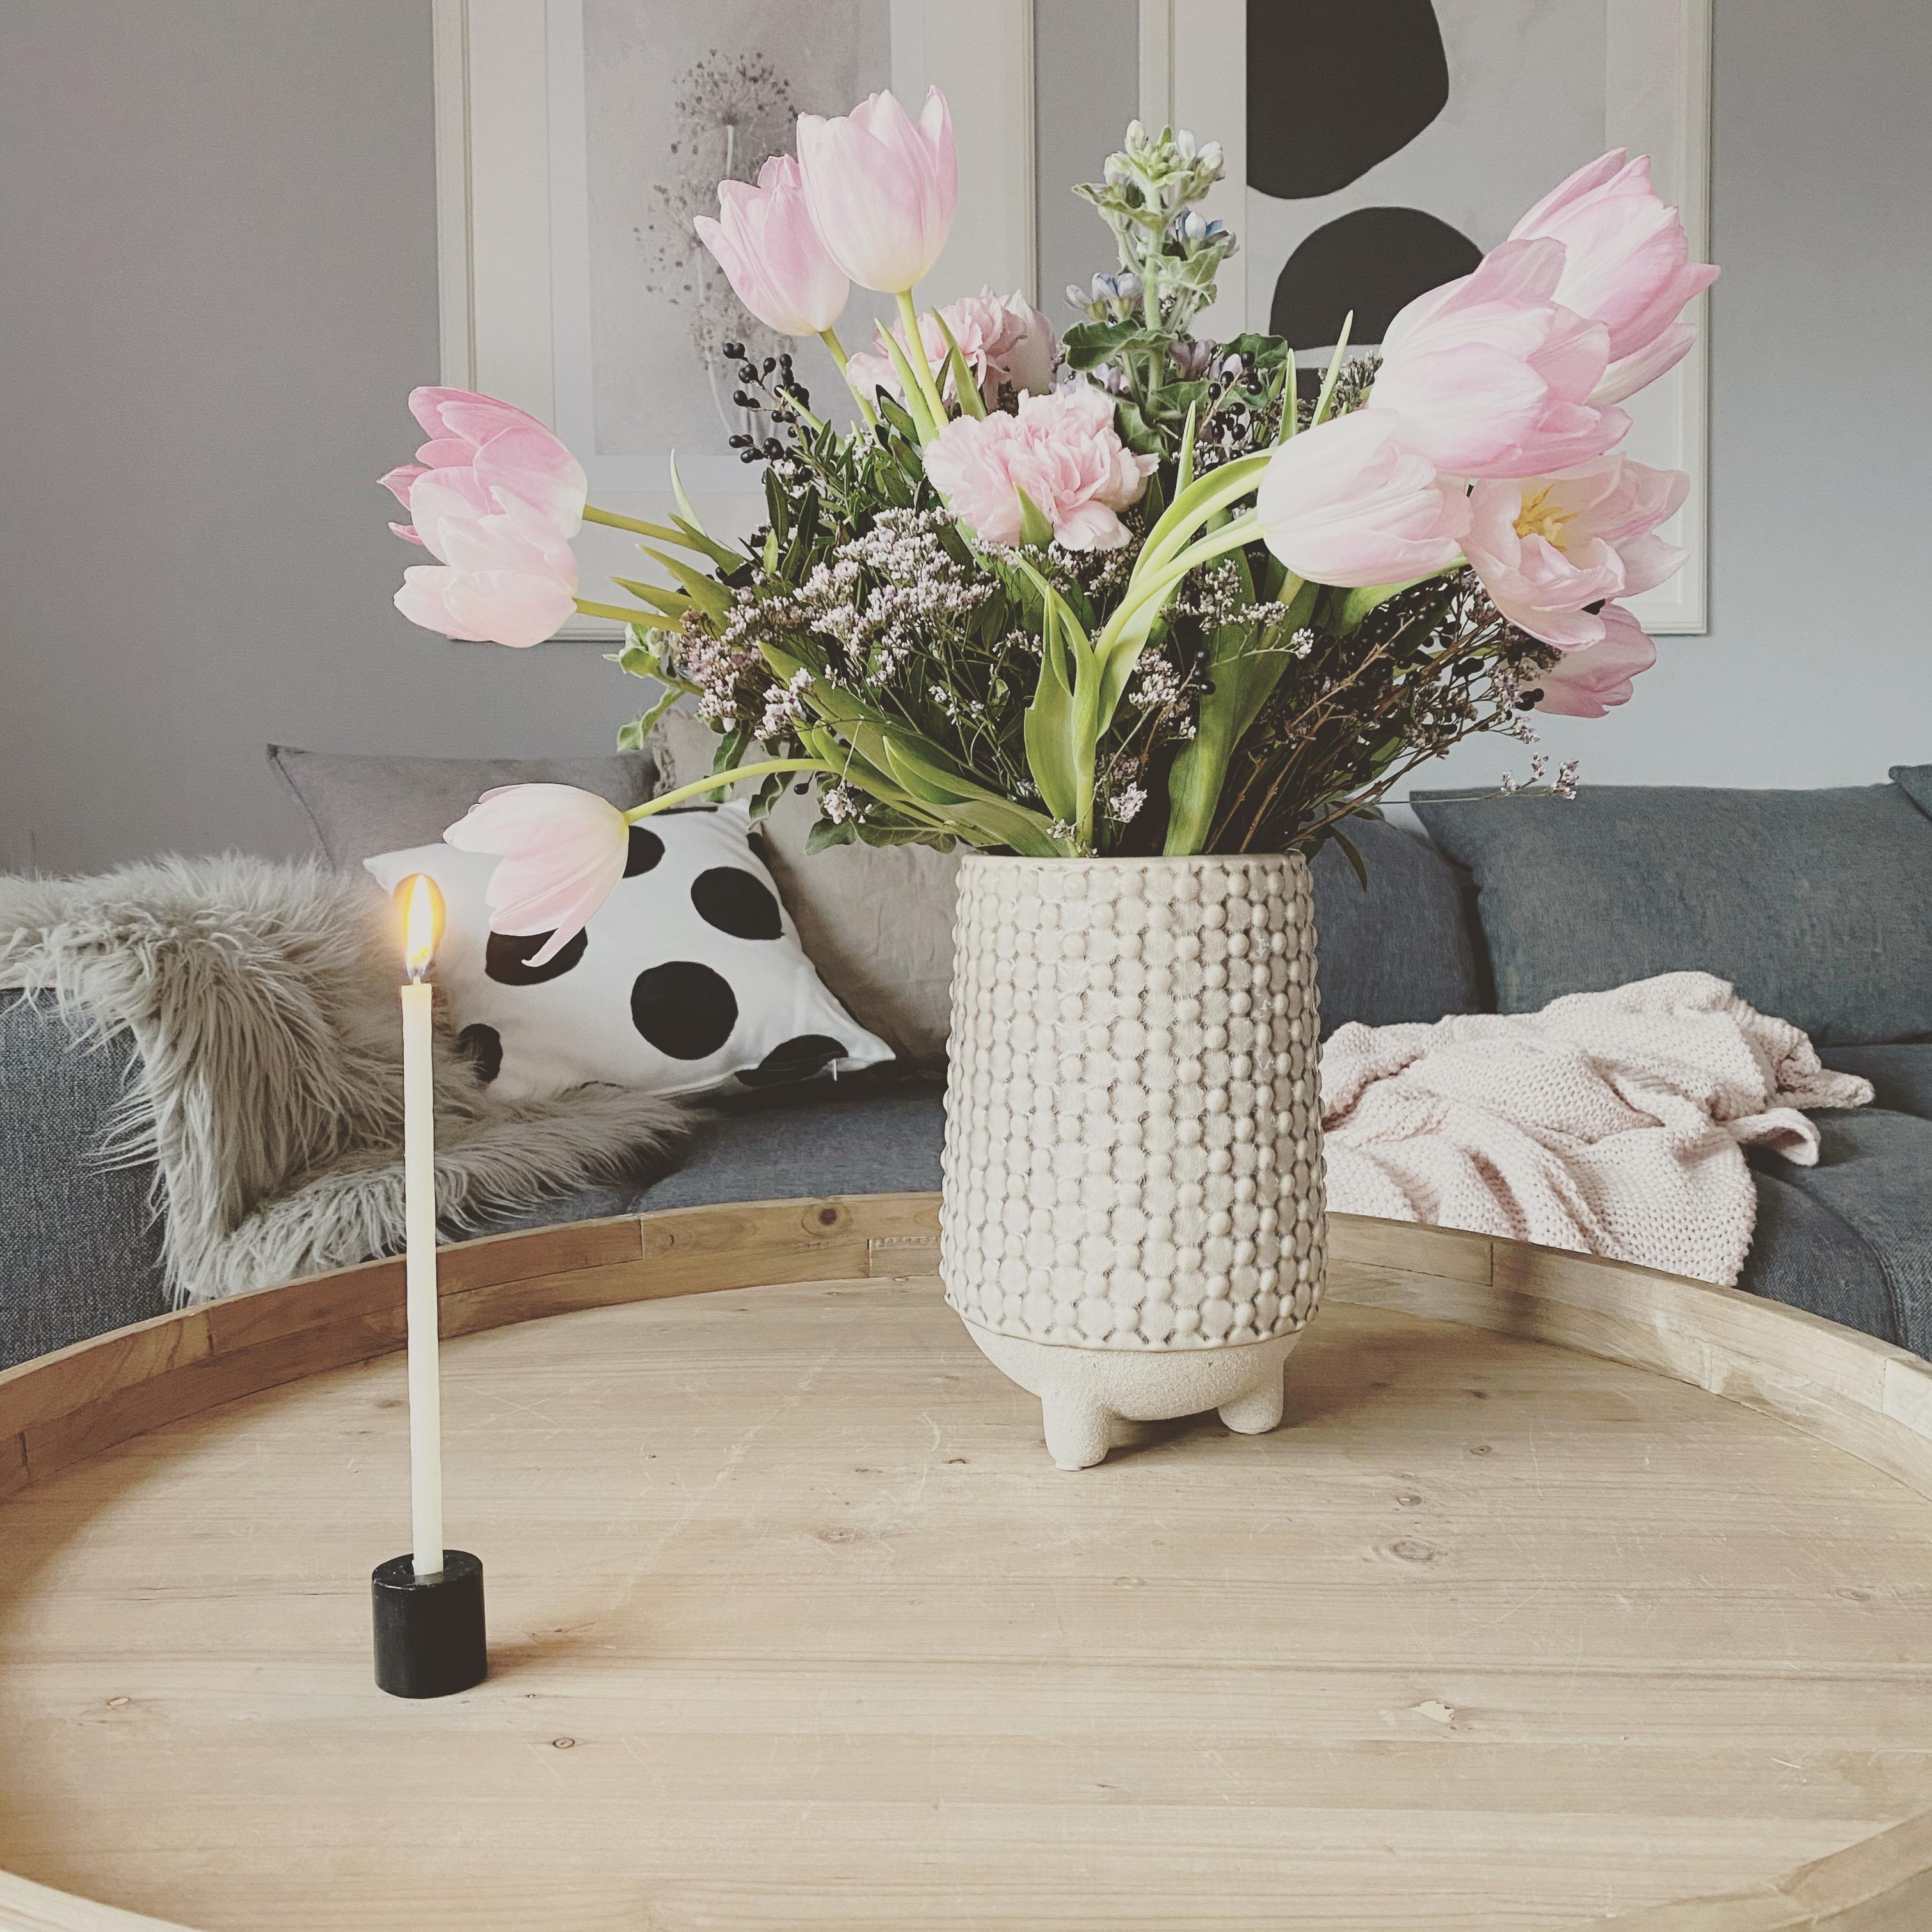 #tulpenliebe#frühlingsboten#dots#couchstyle#vasenliebe#freshflowers